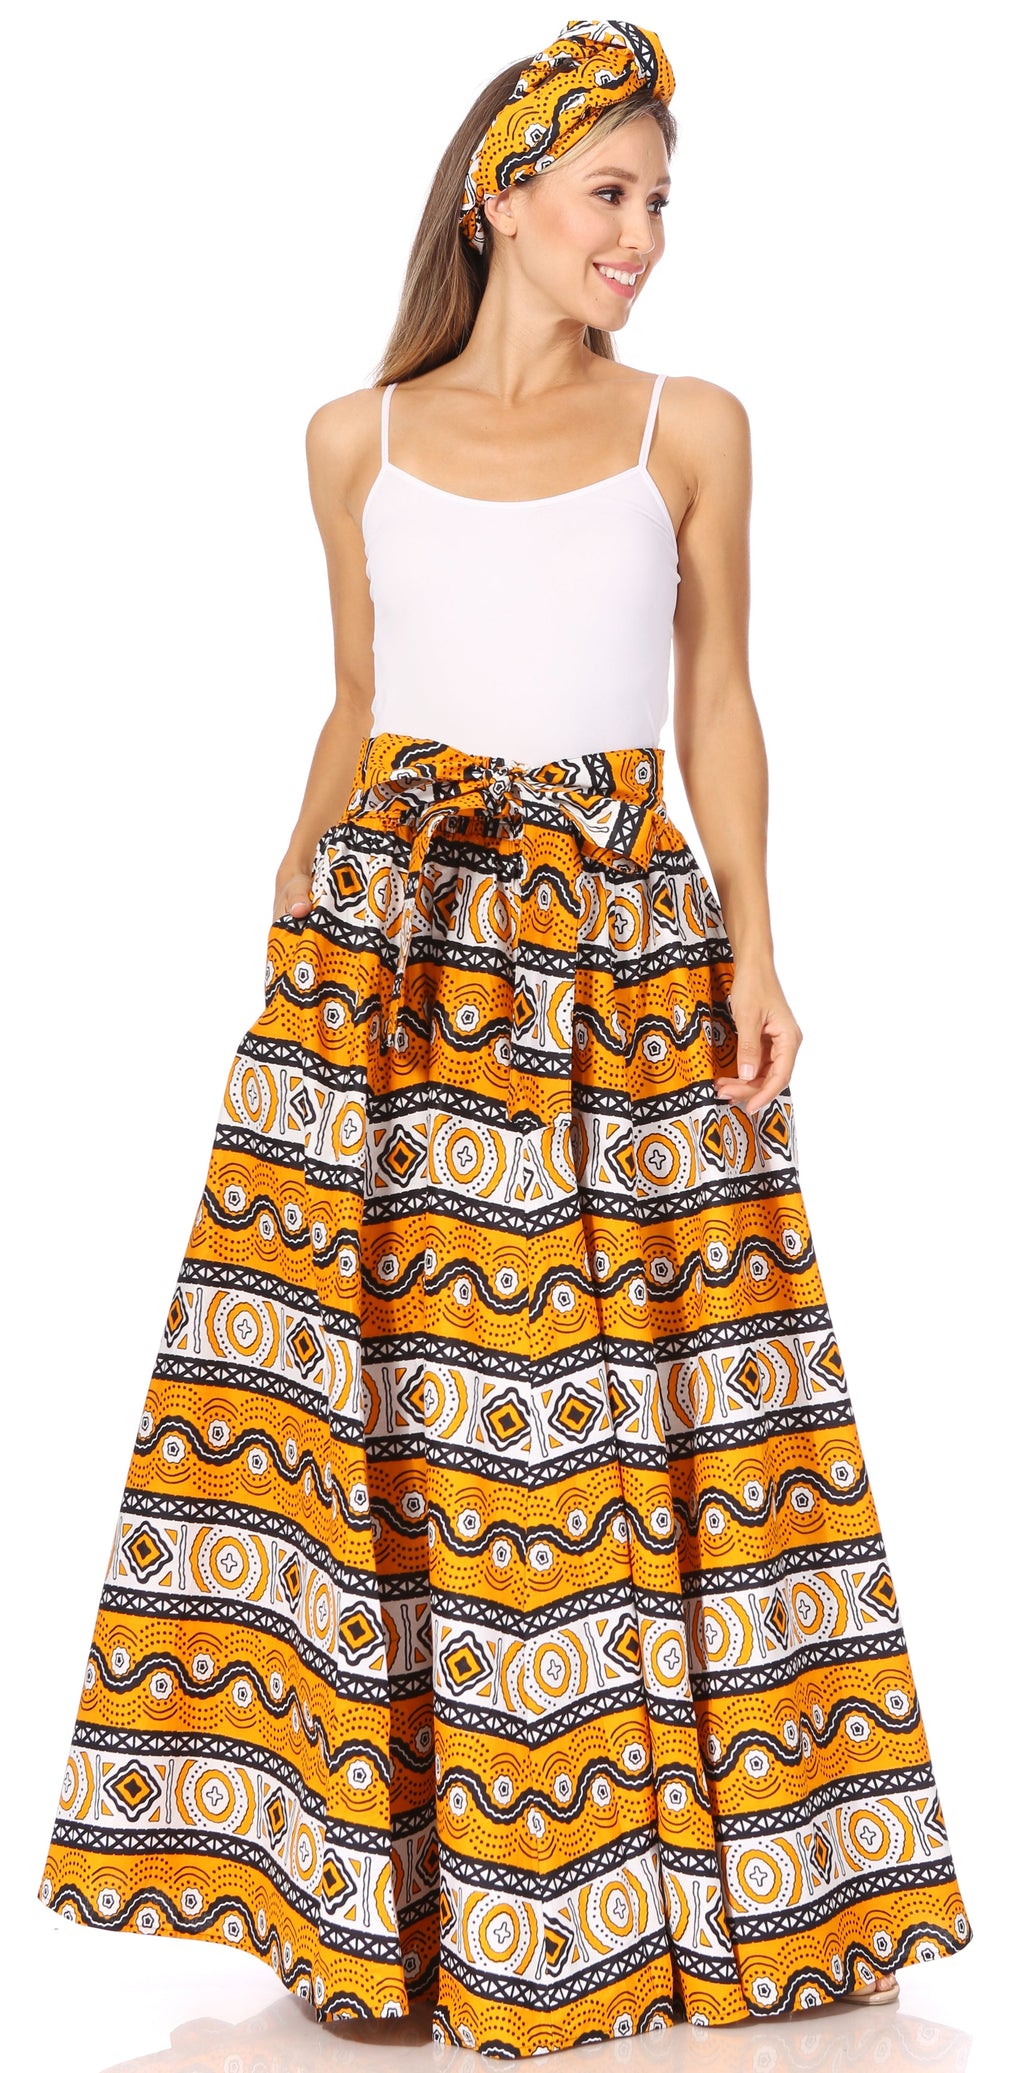 Sakkas Asma's Second Convertible Traditional Wax Print Maxi Skirt with